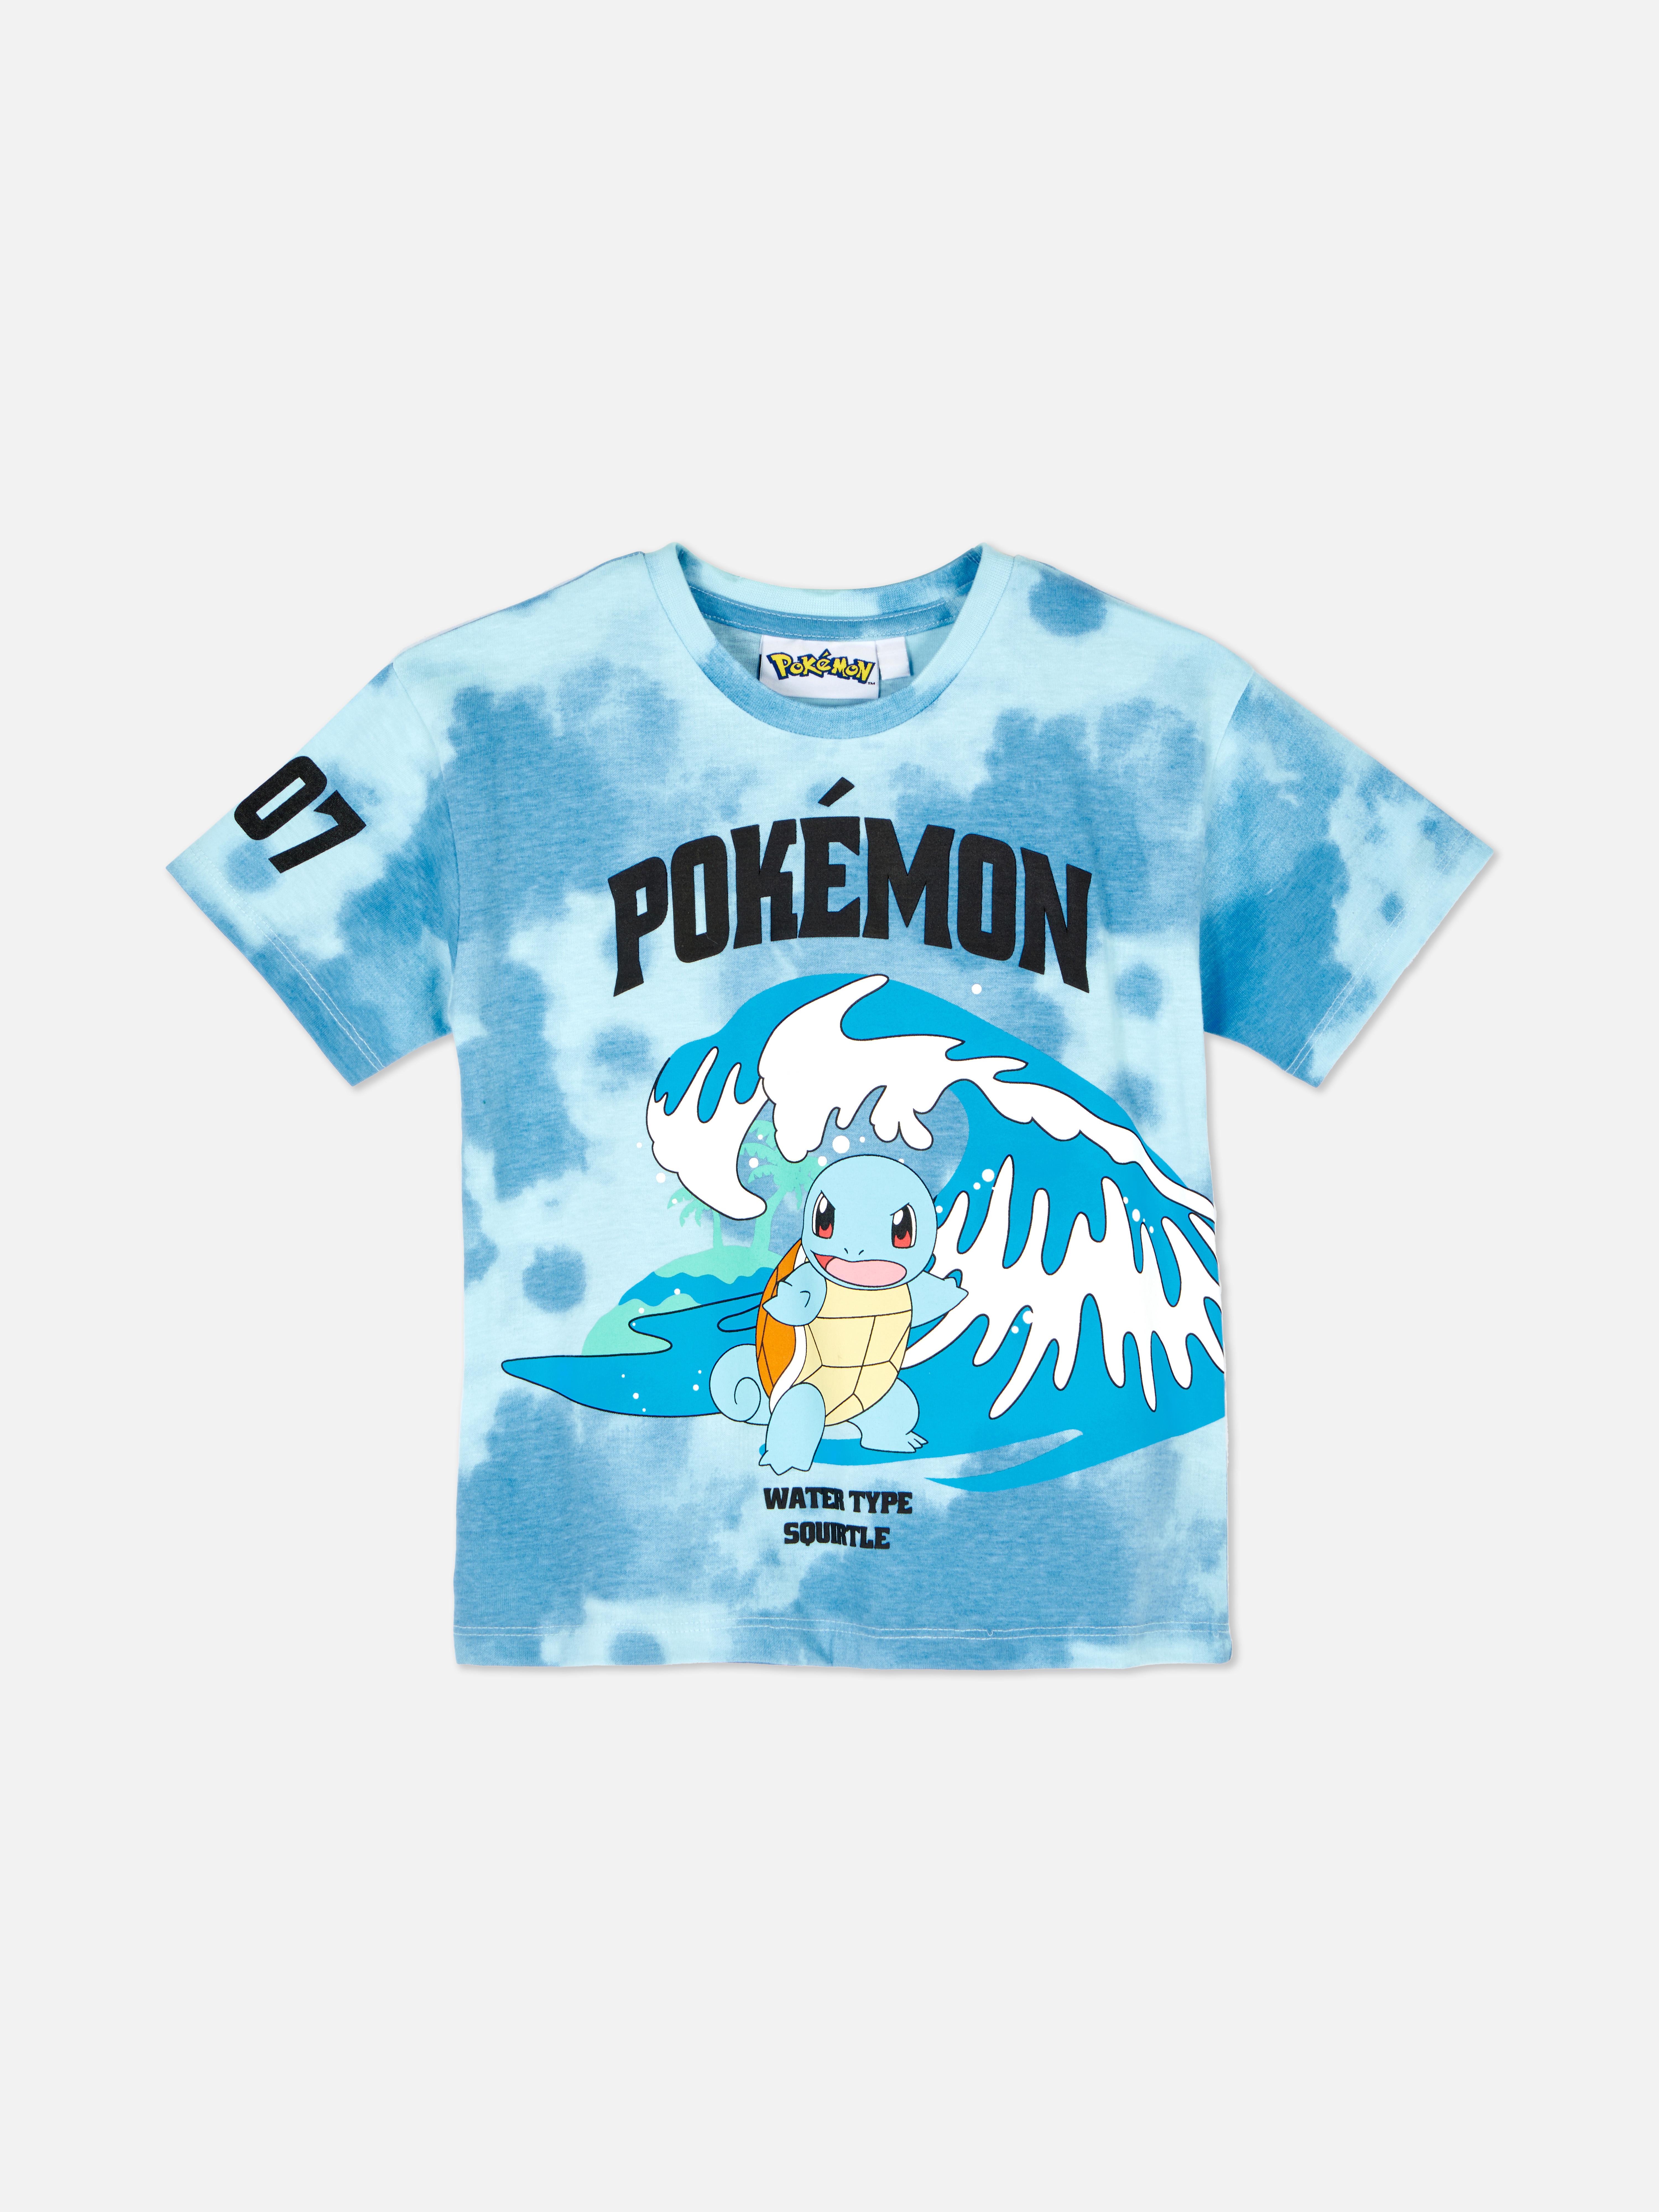 Camisa tye-dye de Squirtle de Pokémon